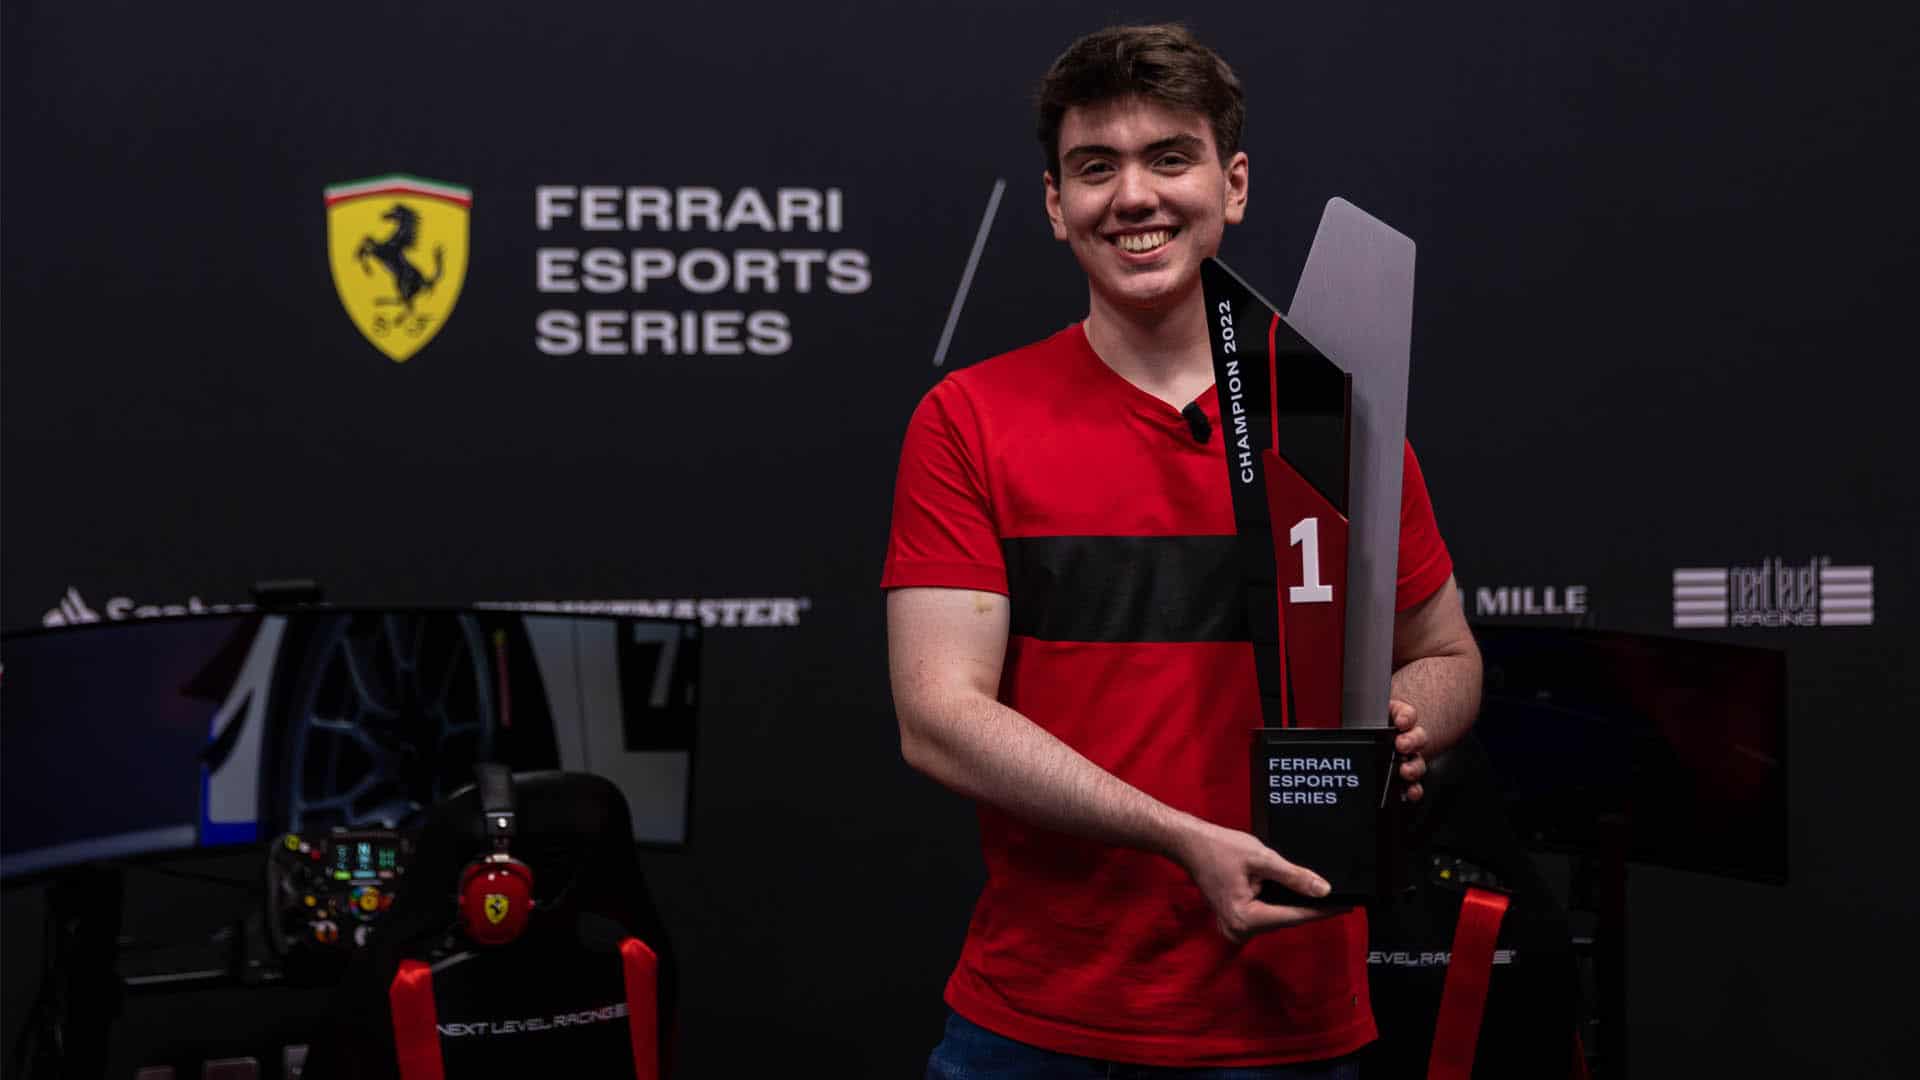 Ferrari Esports Series - Jonathan Riley earns works drive in nail-biting Grand Final